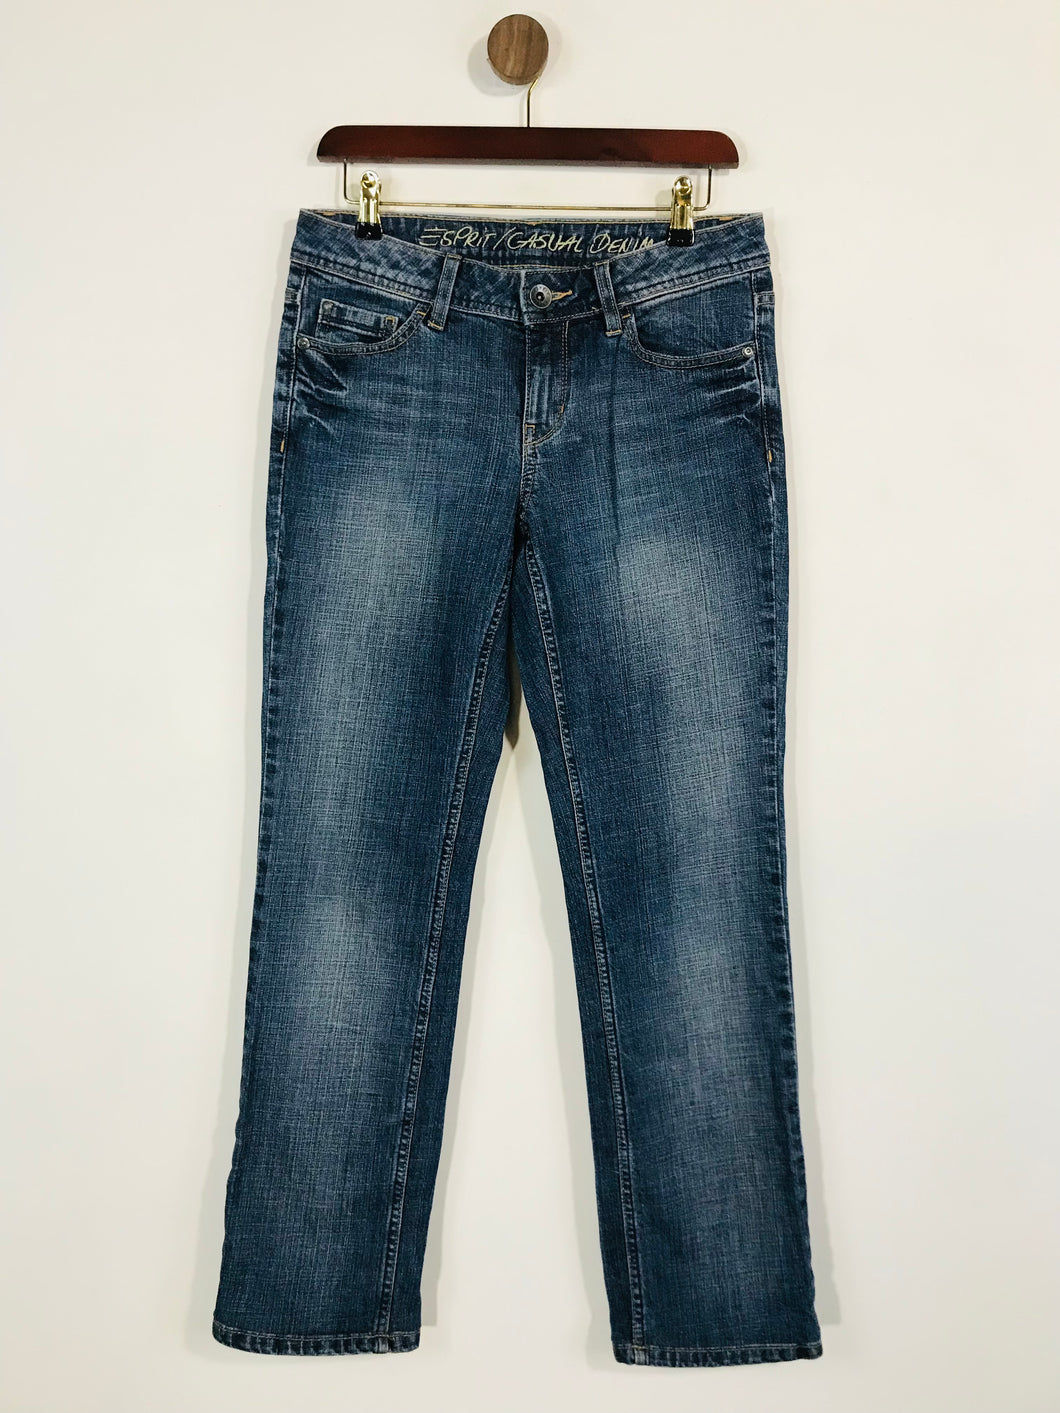 Esprit Women's Straight Jeans | W32 UK14 | Blue